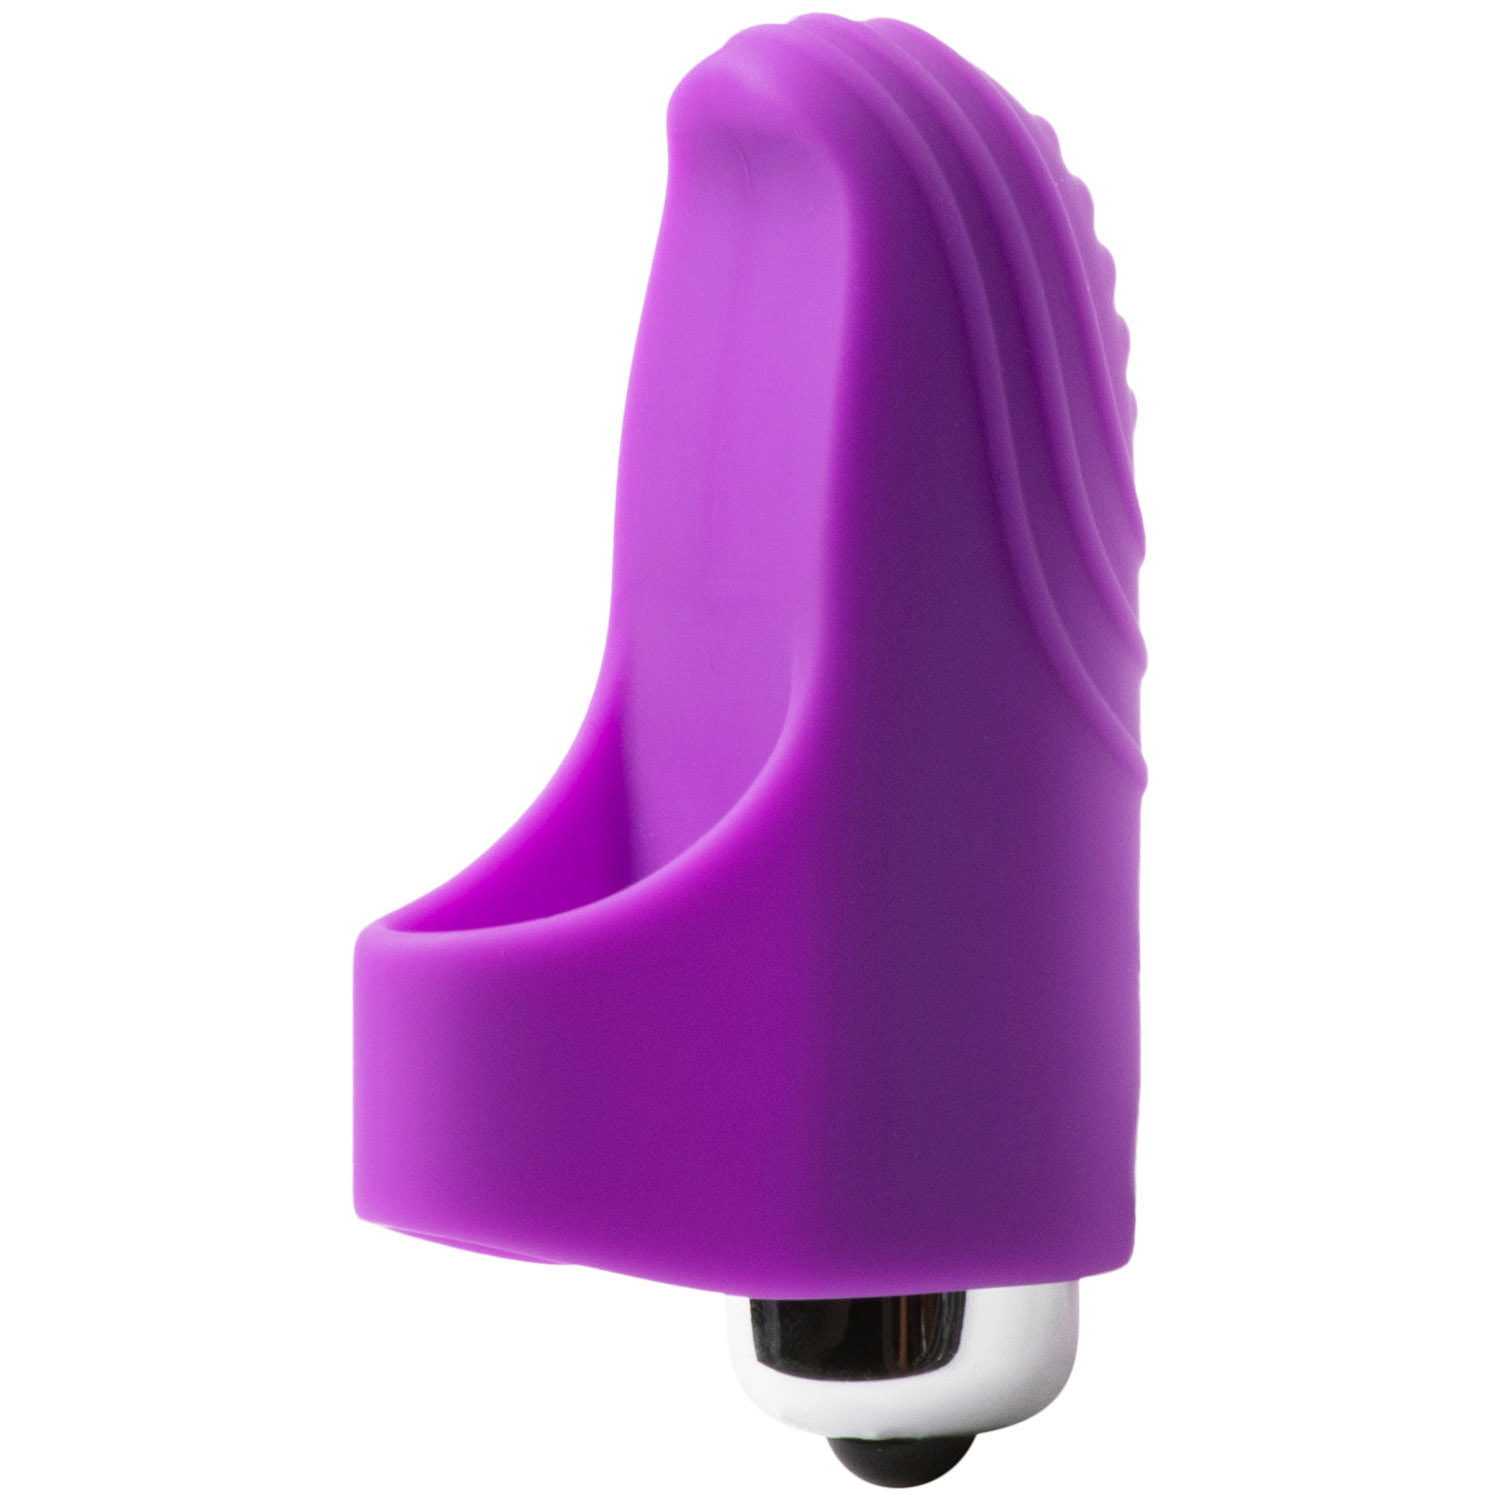 baseks Powerful Finger Vibrator - Purple